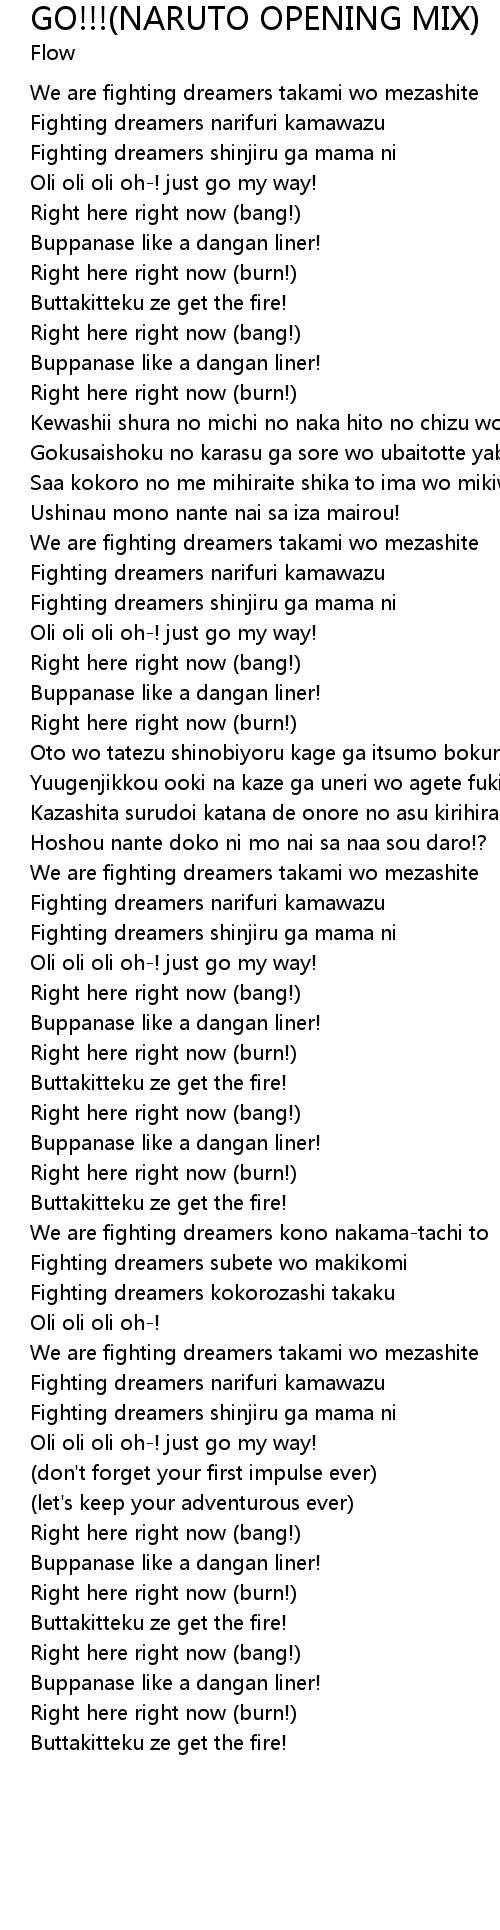 Go Naruto Opening Mix Lyrics Follow Lyrics